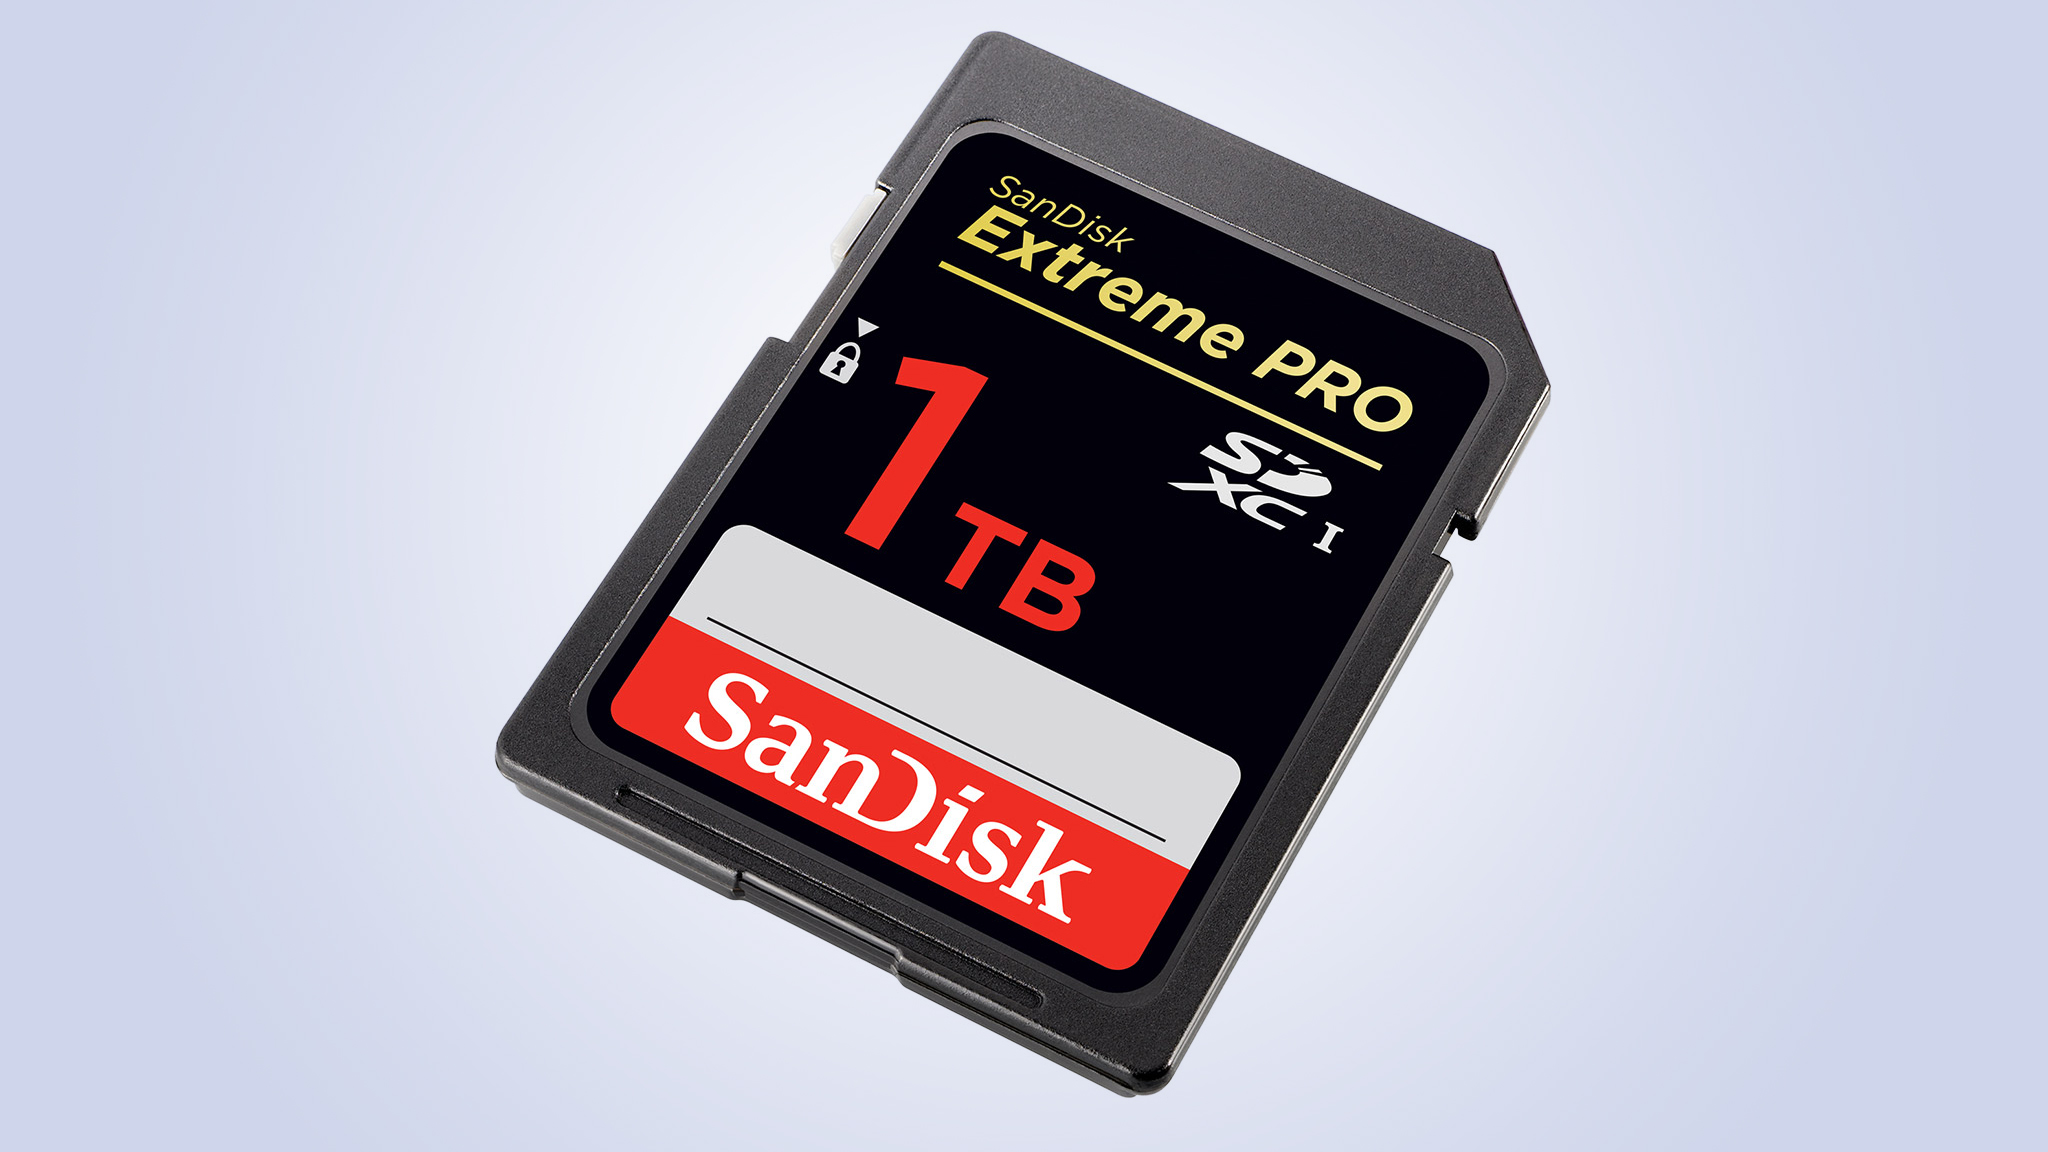 Memory compact sandisk kamera compactflash 8gb kartu jenis memori apertura imballaggio cmrp resguardo informacion almacenamiento